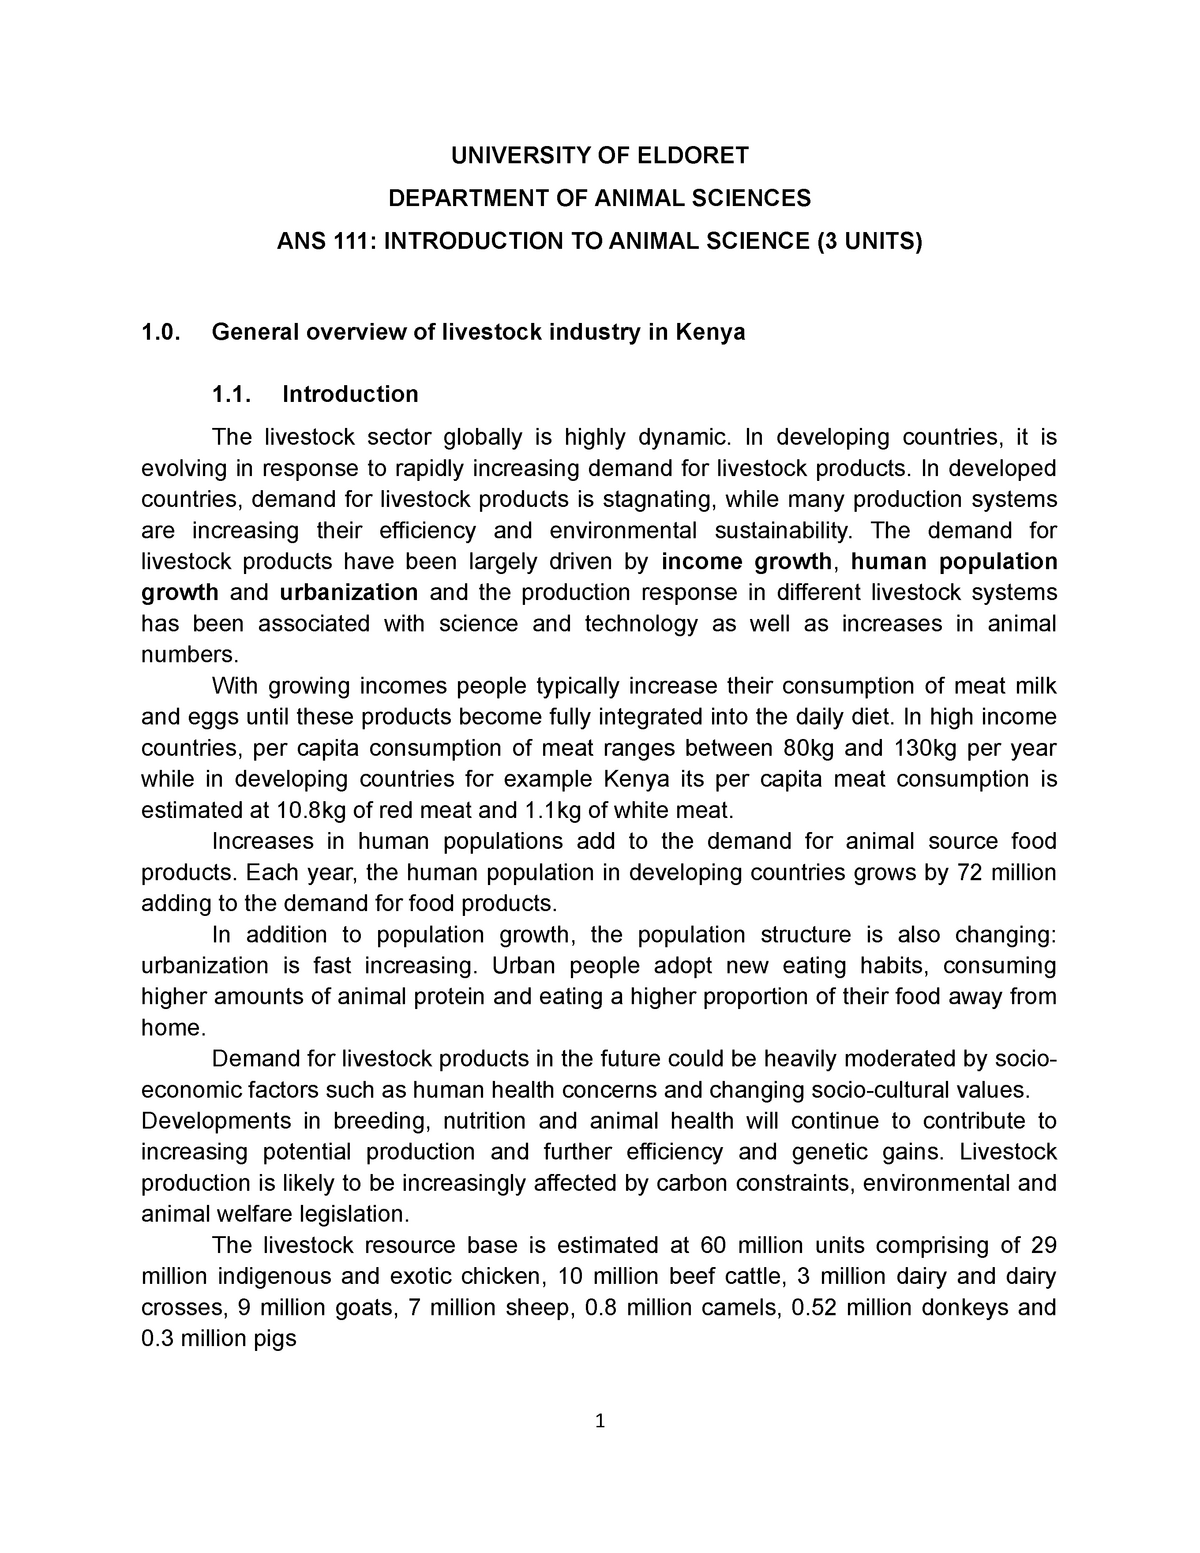 ANS 202 Principles OF Animal Production-summary notes - UNIVERSITY OF  ELDORET DEPARTMENT OF ANIMAL - Studocu